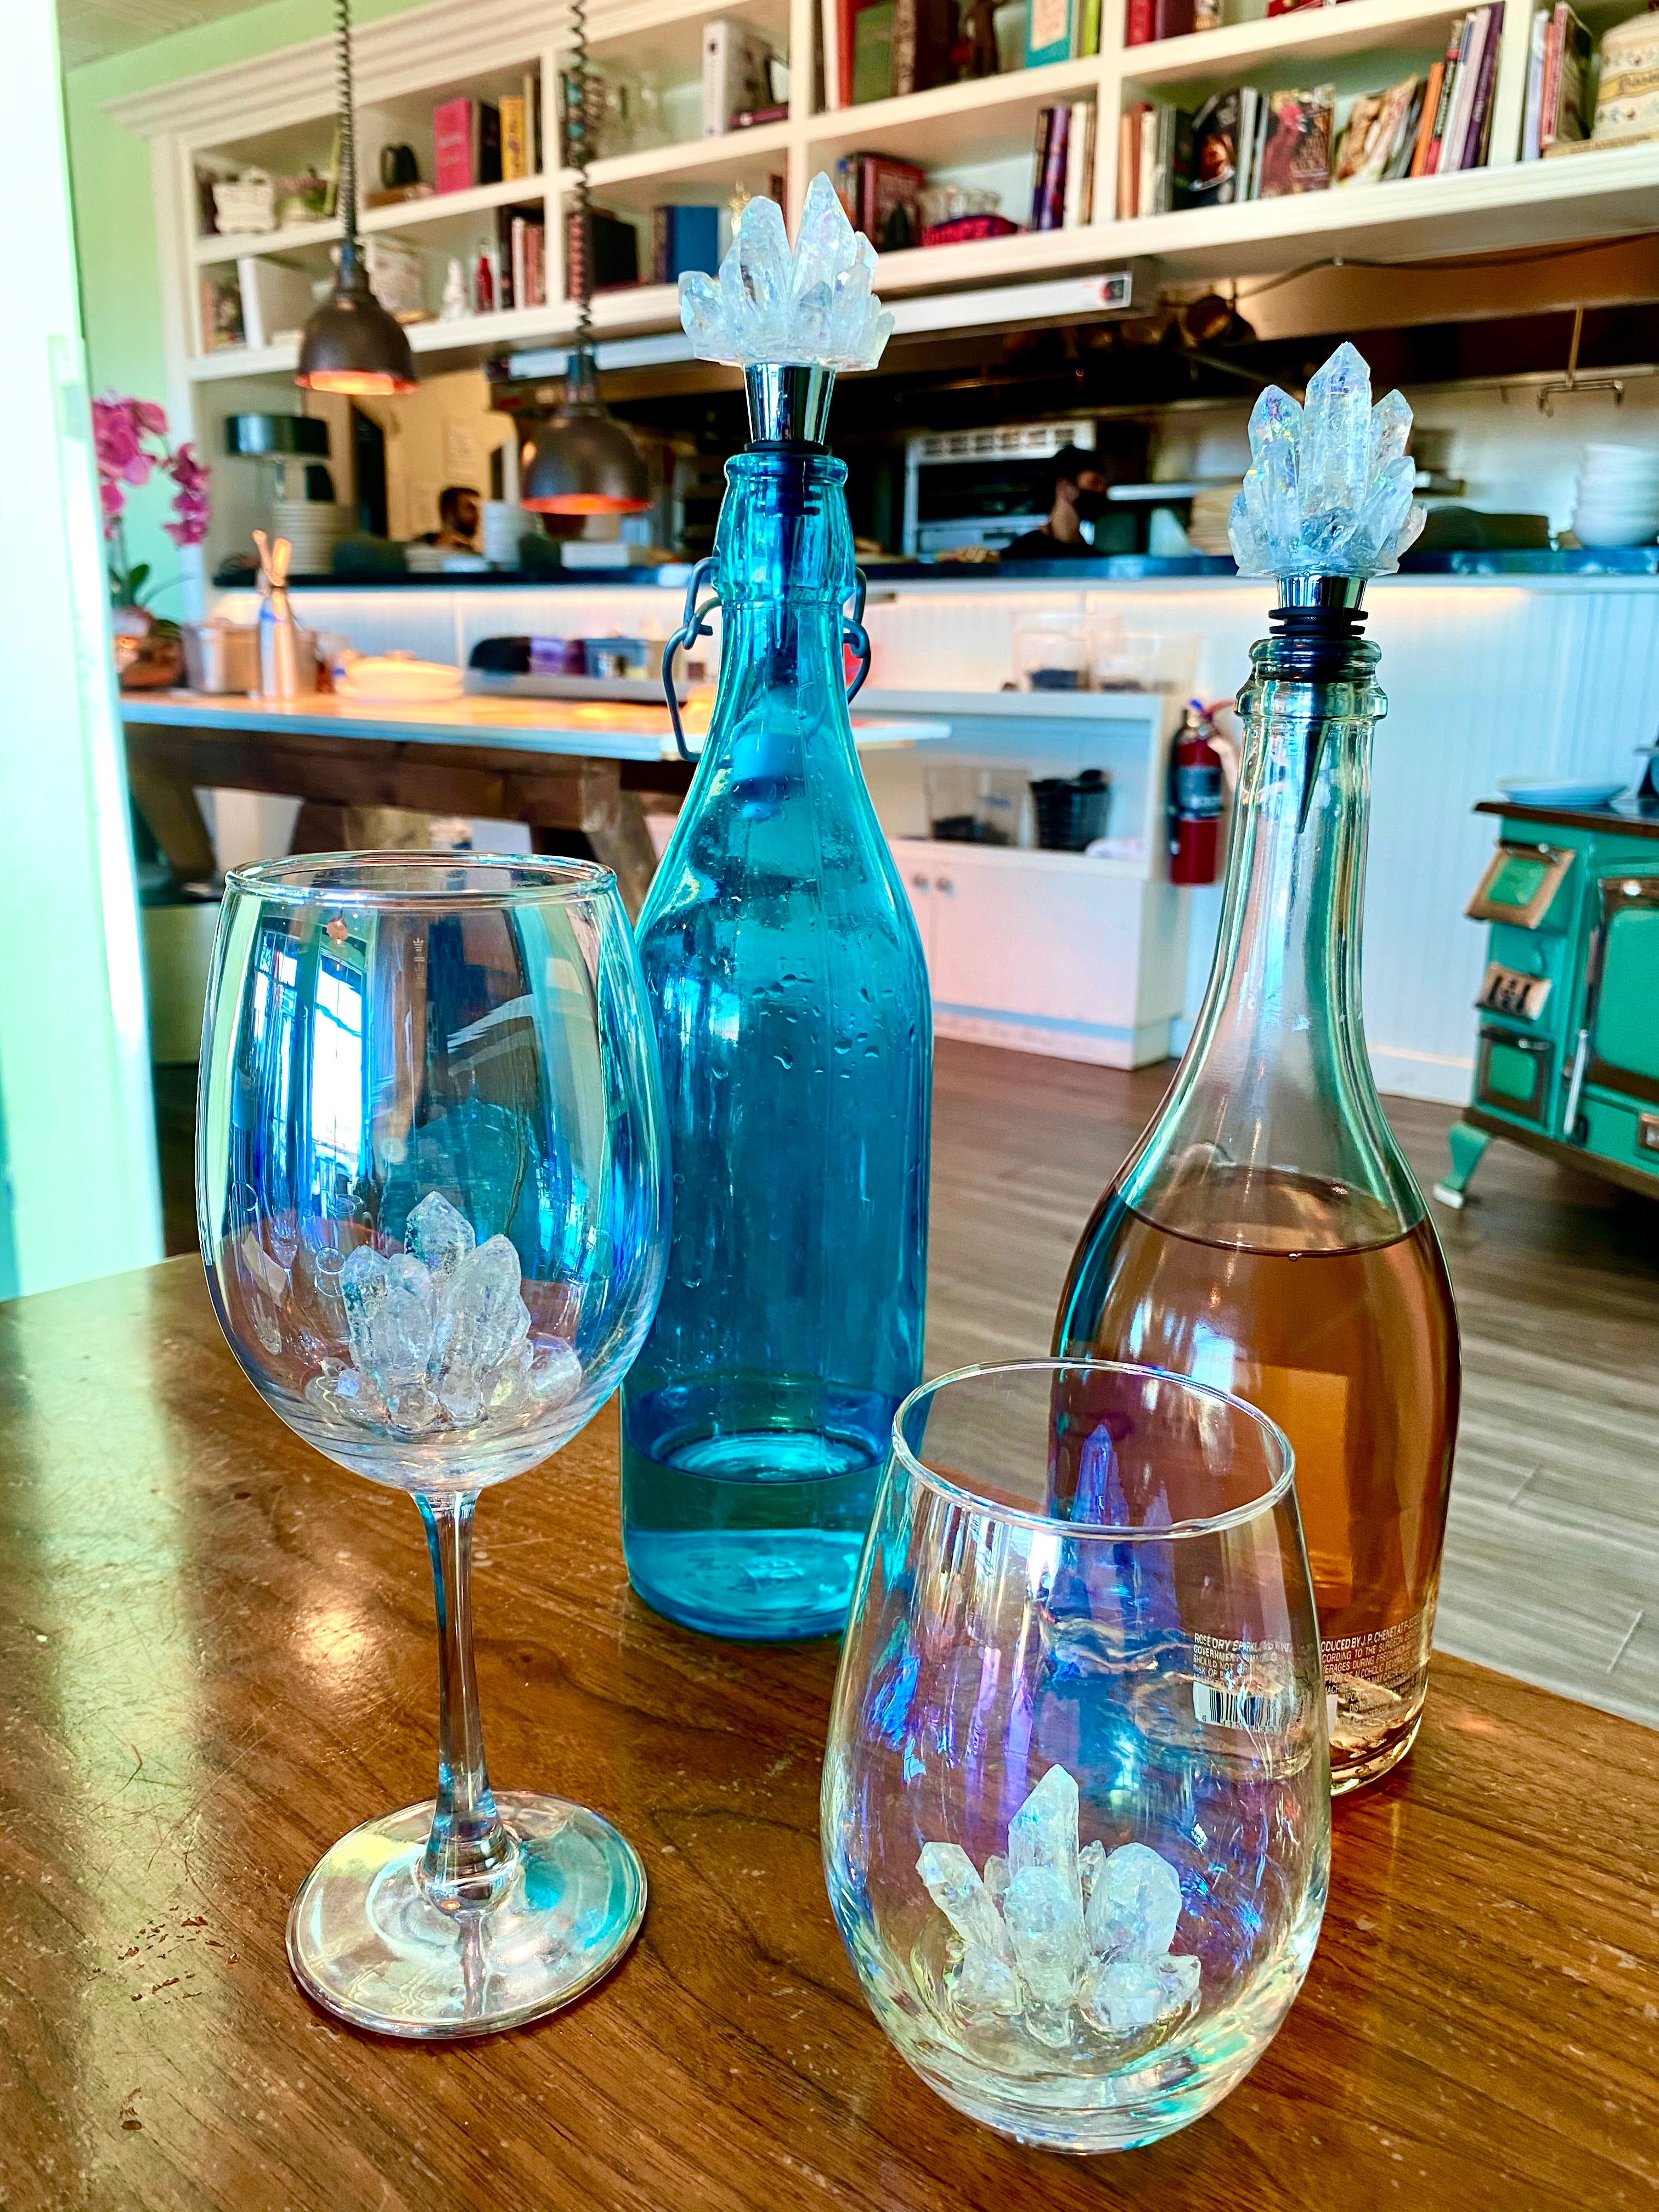 Unique Aura Aerating No Spill Wine Glasses - Set of 2 Stemless Glasses